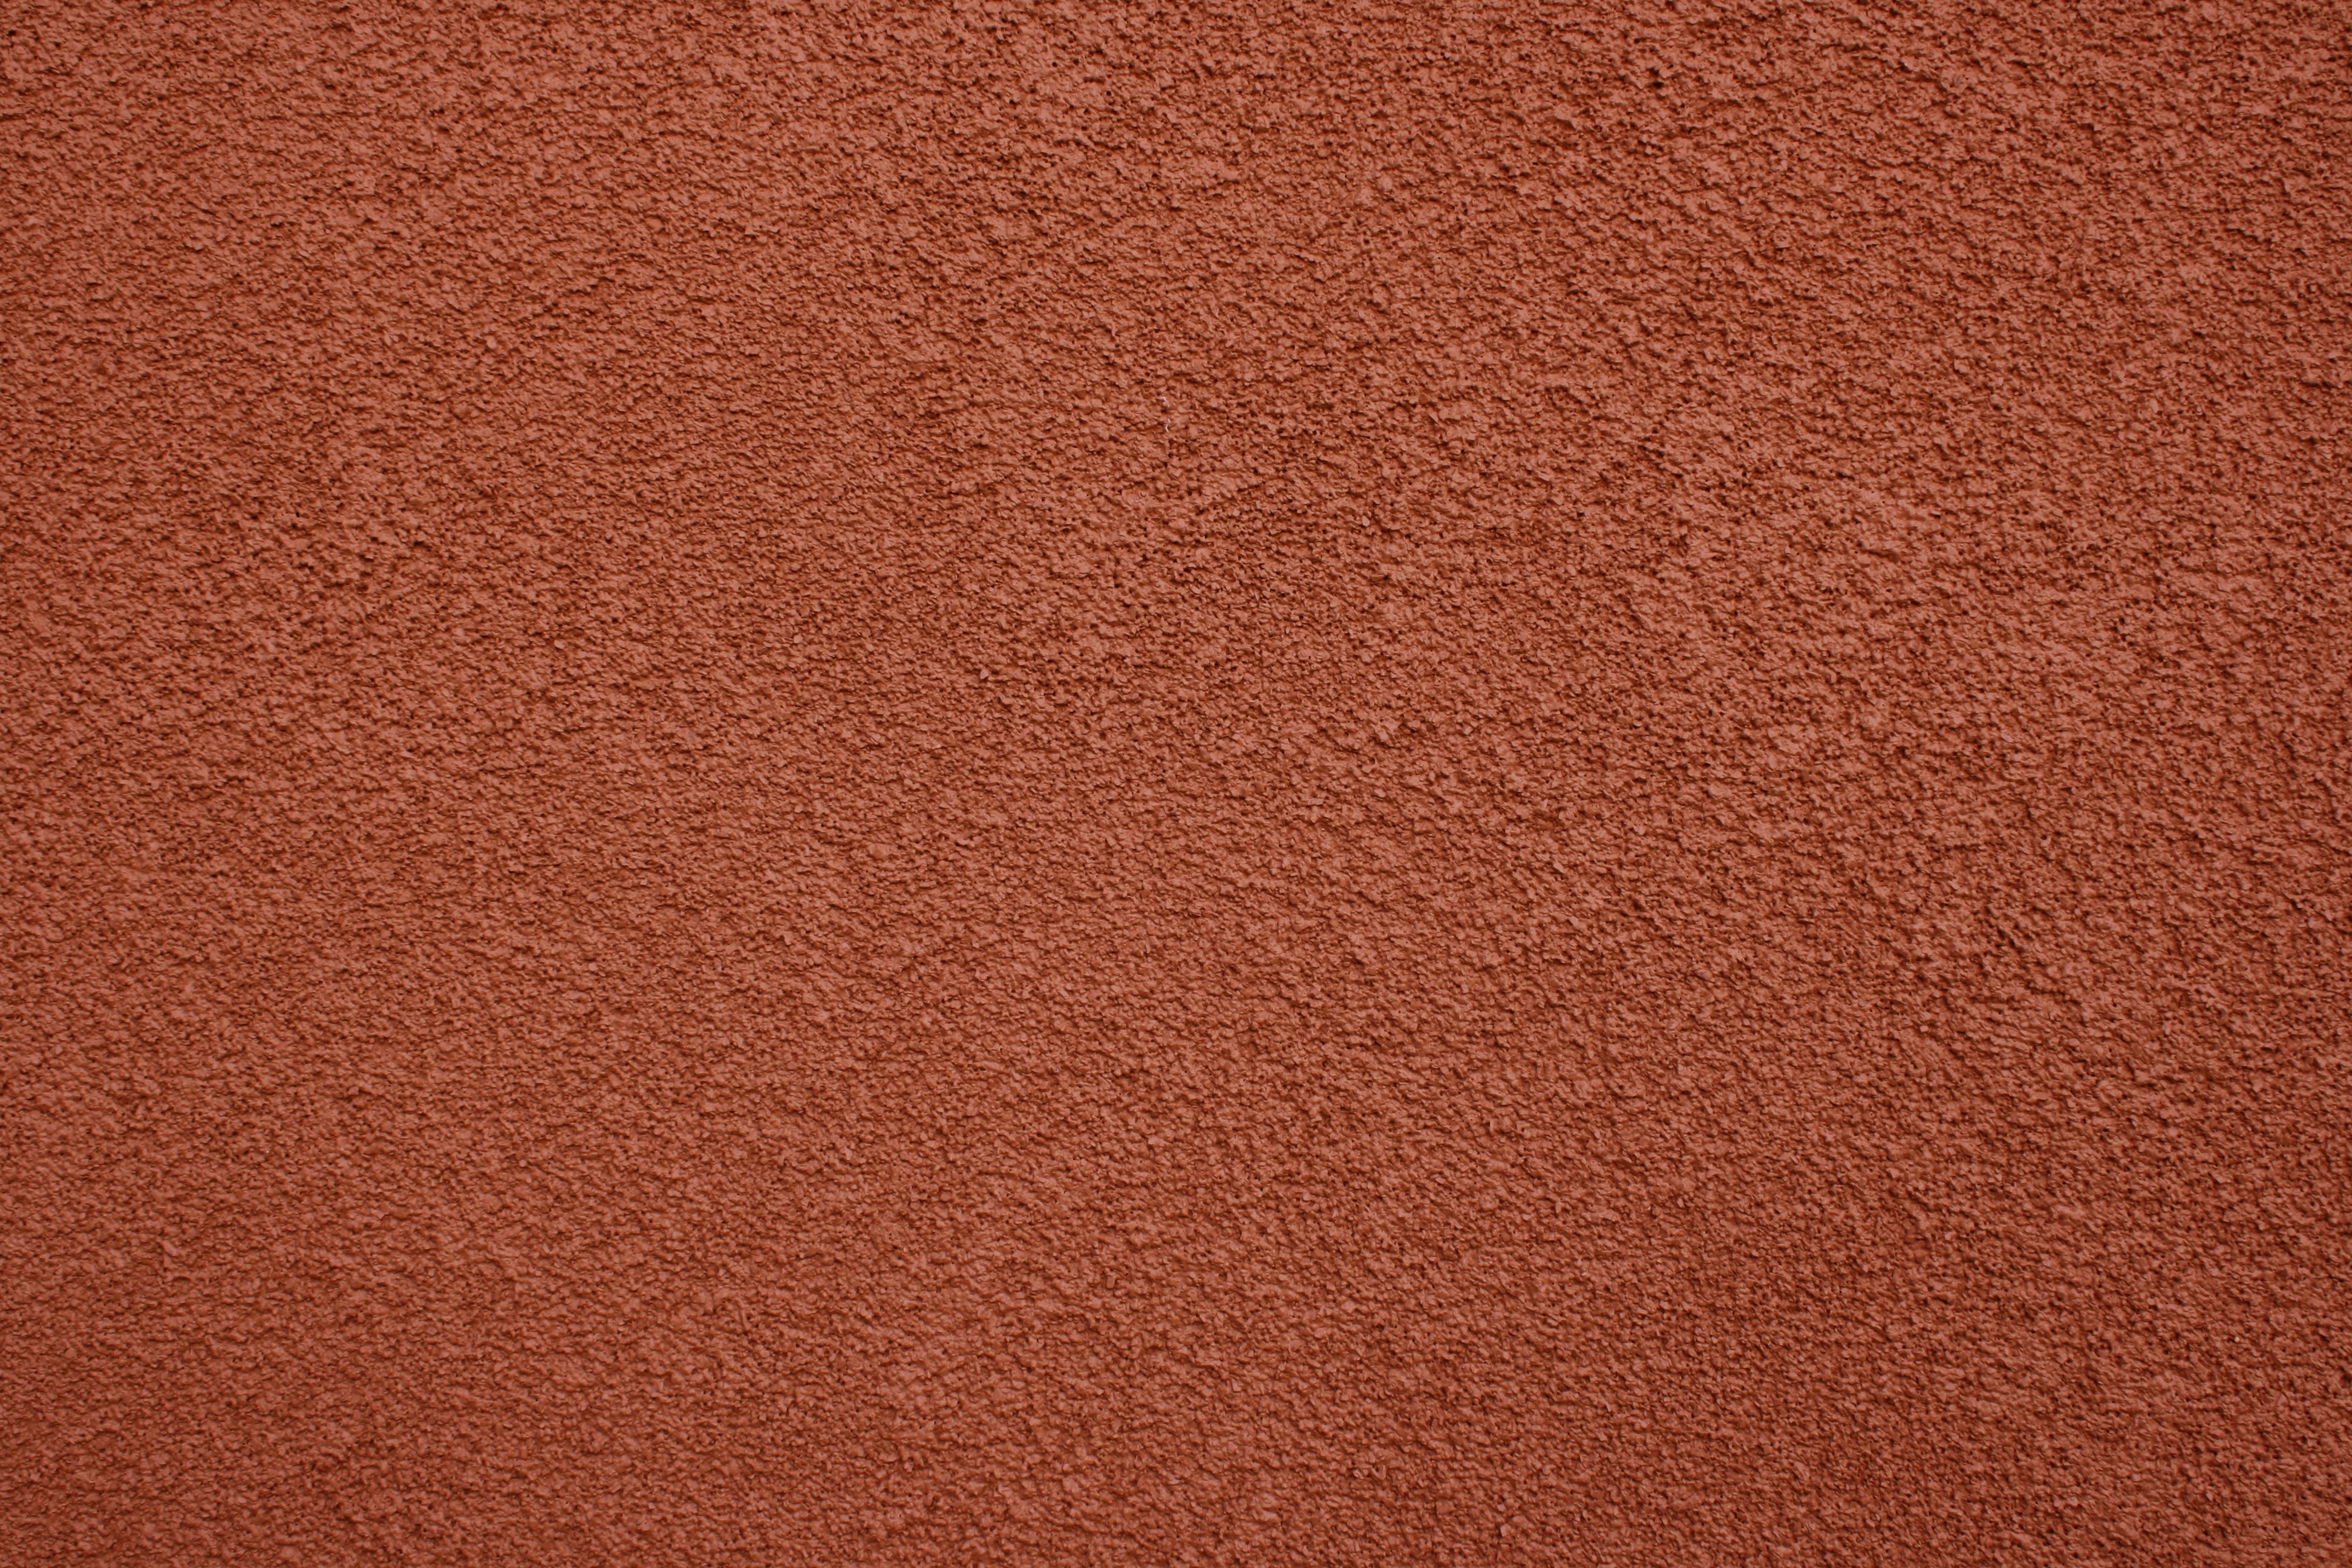 Orange Brick Wall Texture Picture Free Photograph Photos ~ arafen